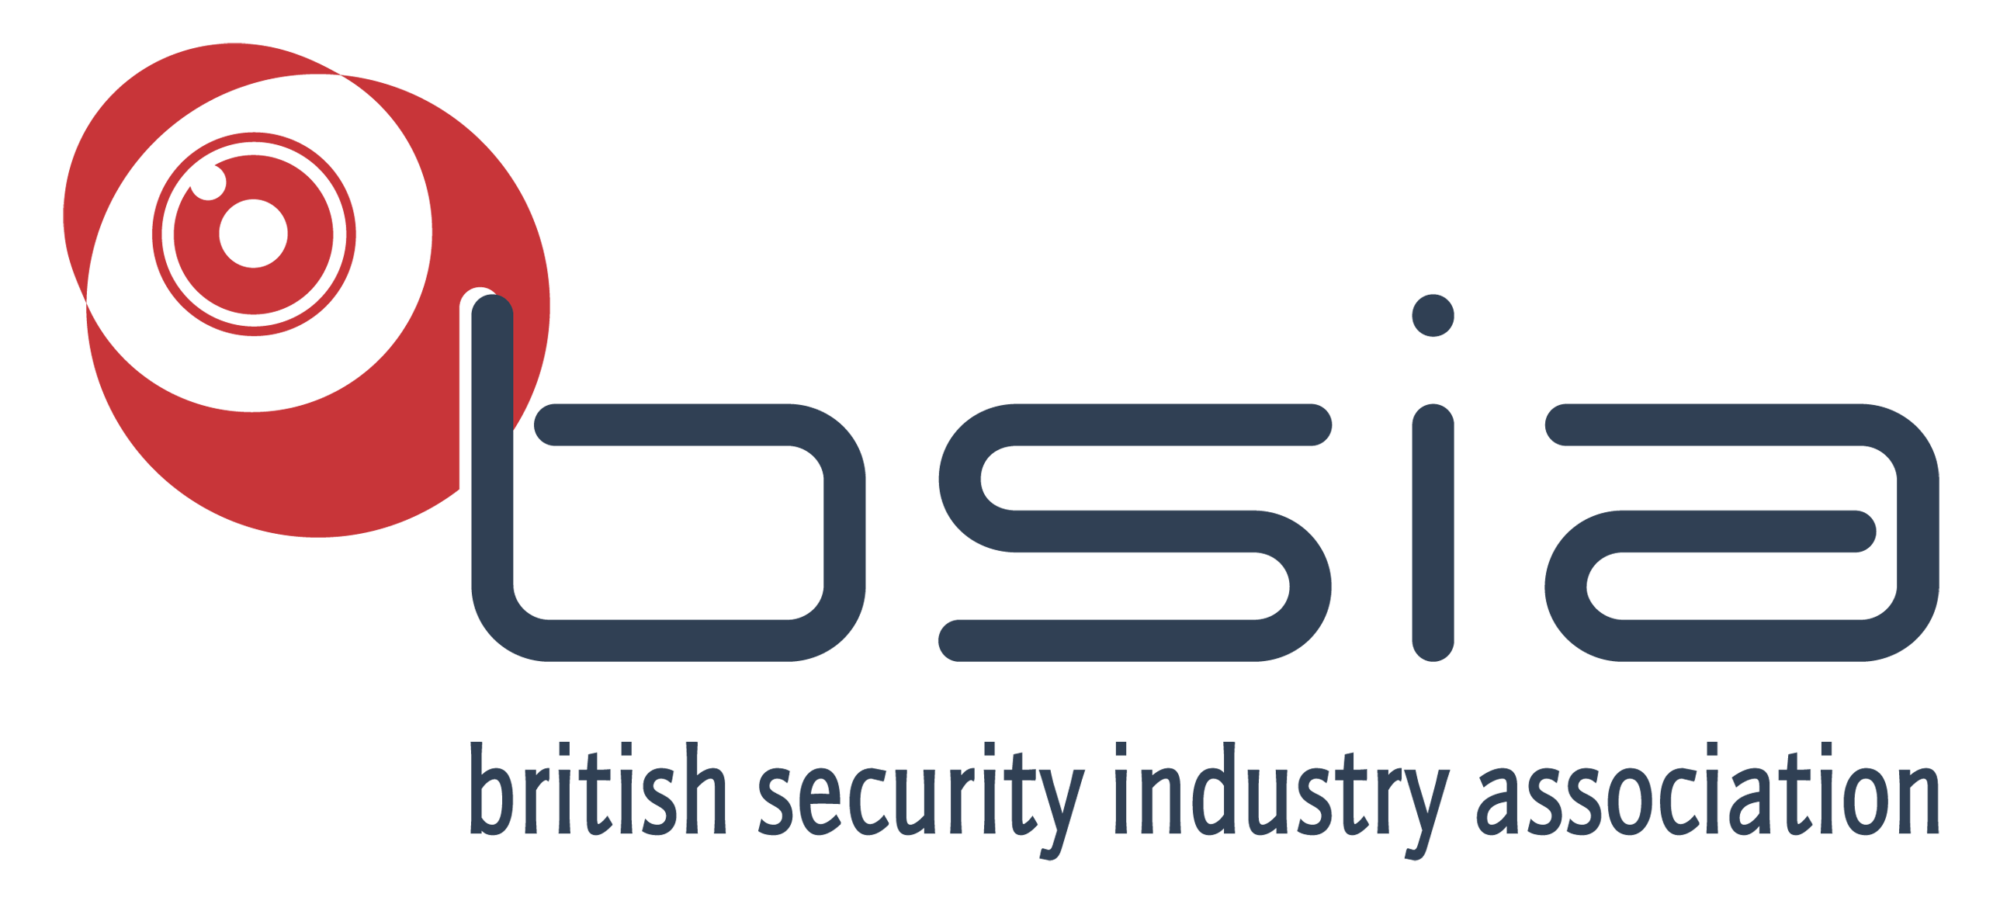 British Security Industry Association Logo